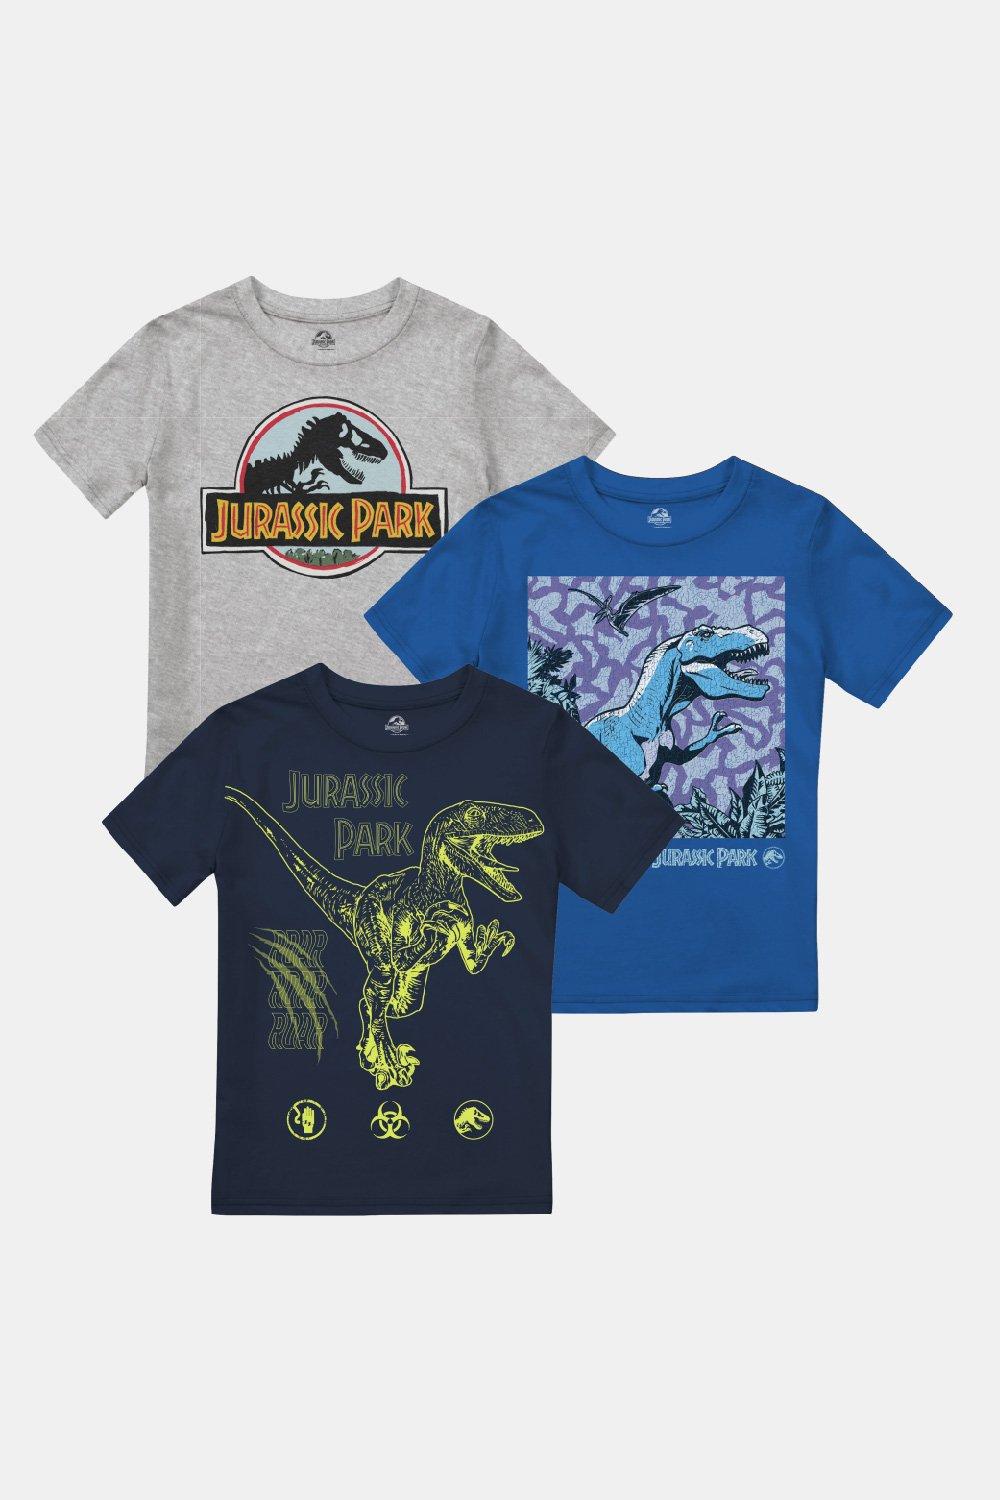 Набор футболок для мальчиков Trex & Raptor, 3 шт. Jurassic Park, мультиколор